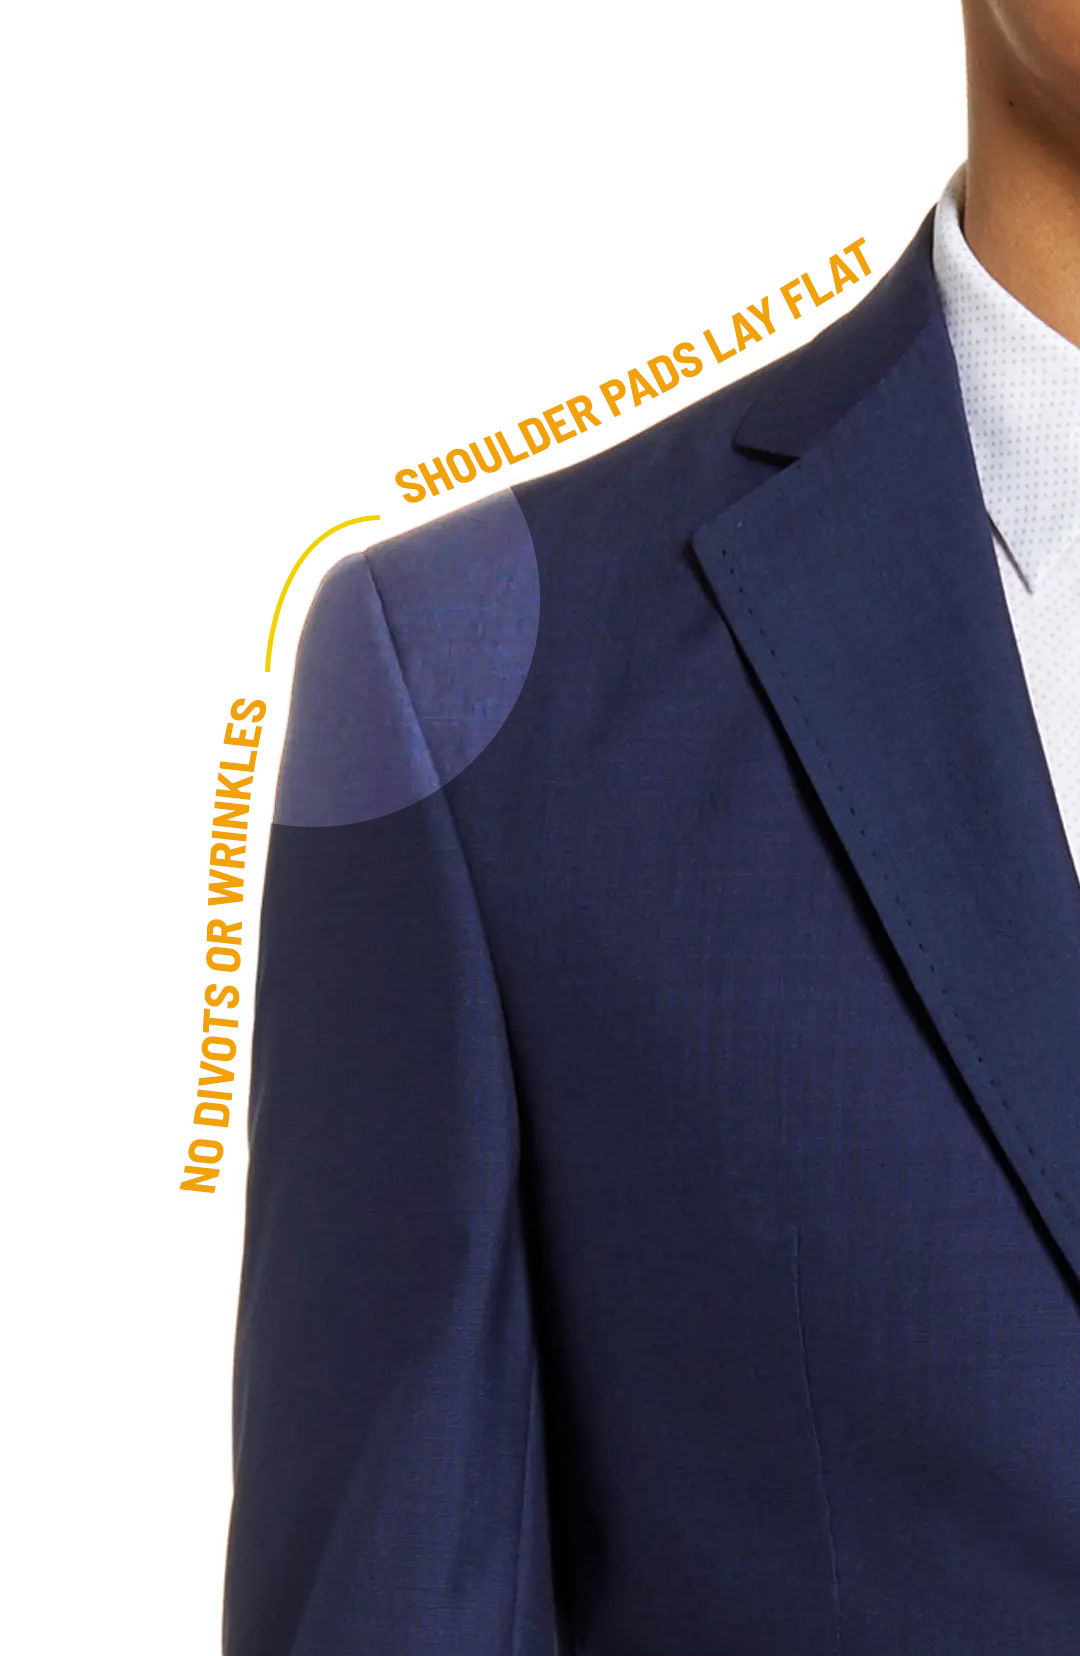 How should a suit fit: flat suit jacket shoulders with no divots or wrinkles